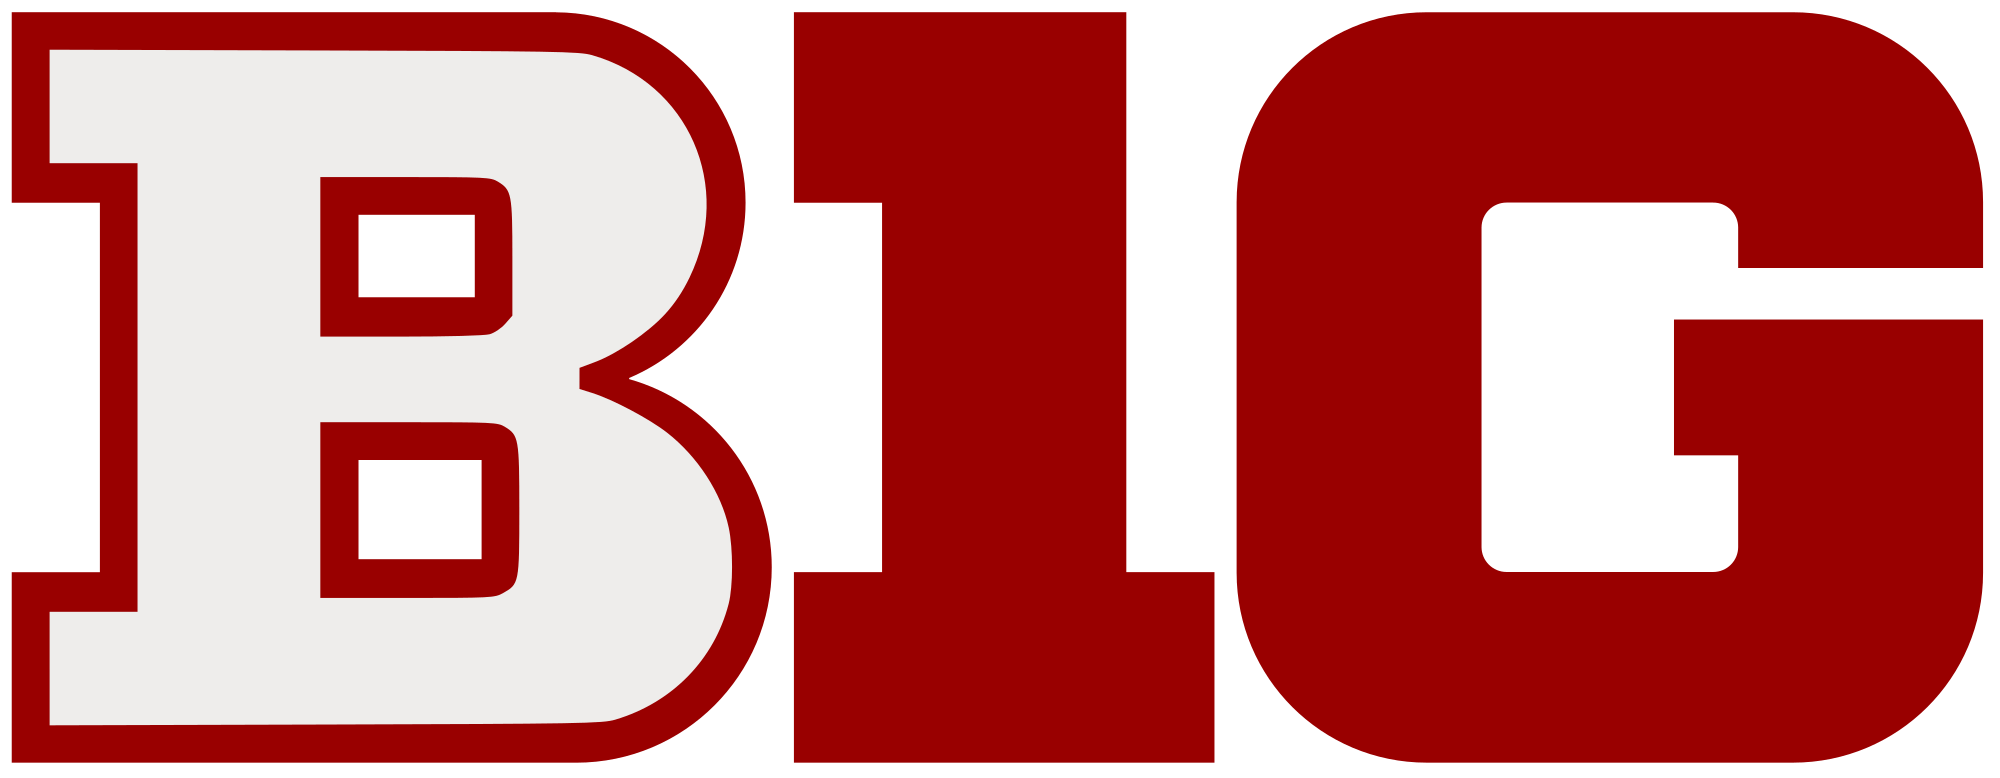 Indiana Logo - Big Ten logo in Indiana colors.svg